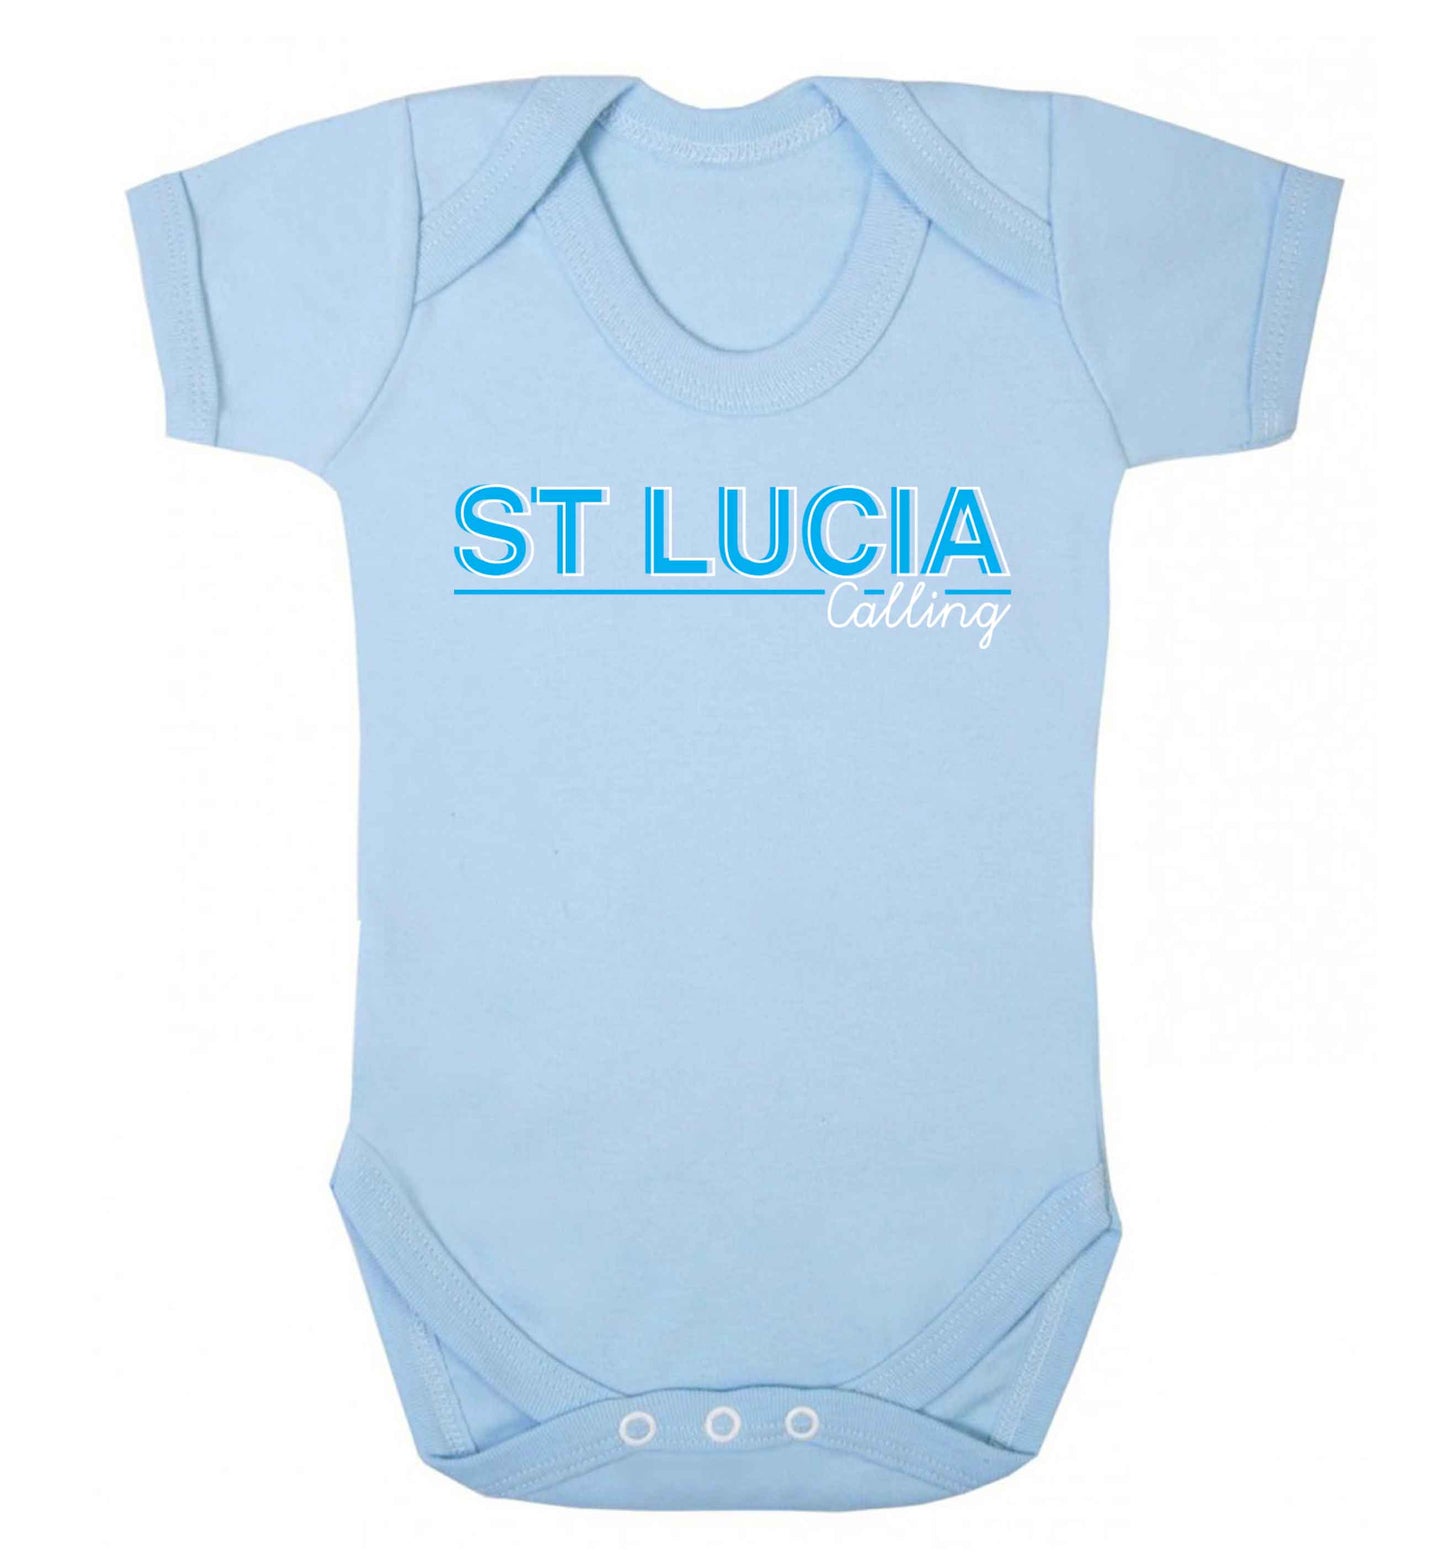 St Lucia calling Baby Vest pale blue 18-24 months